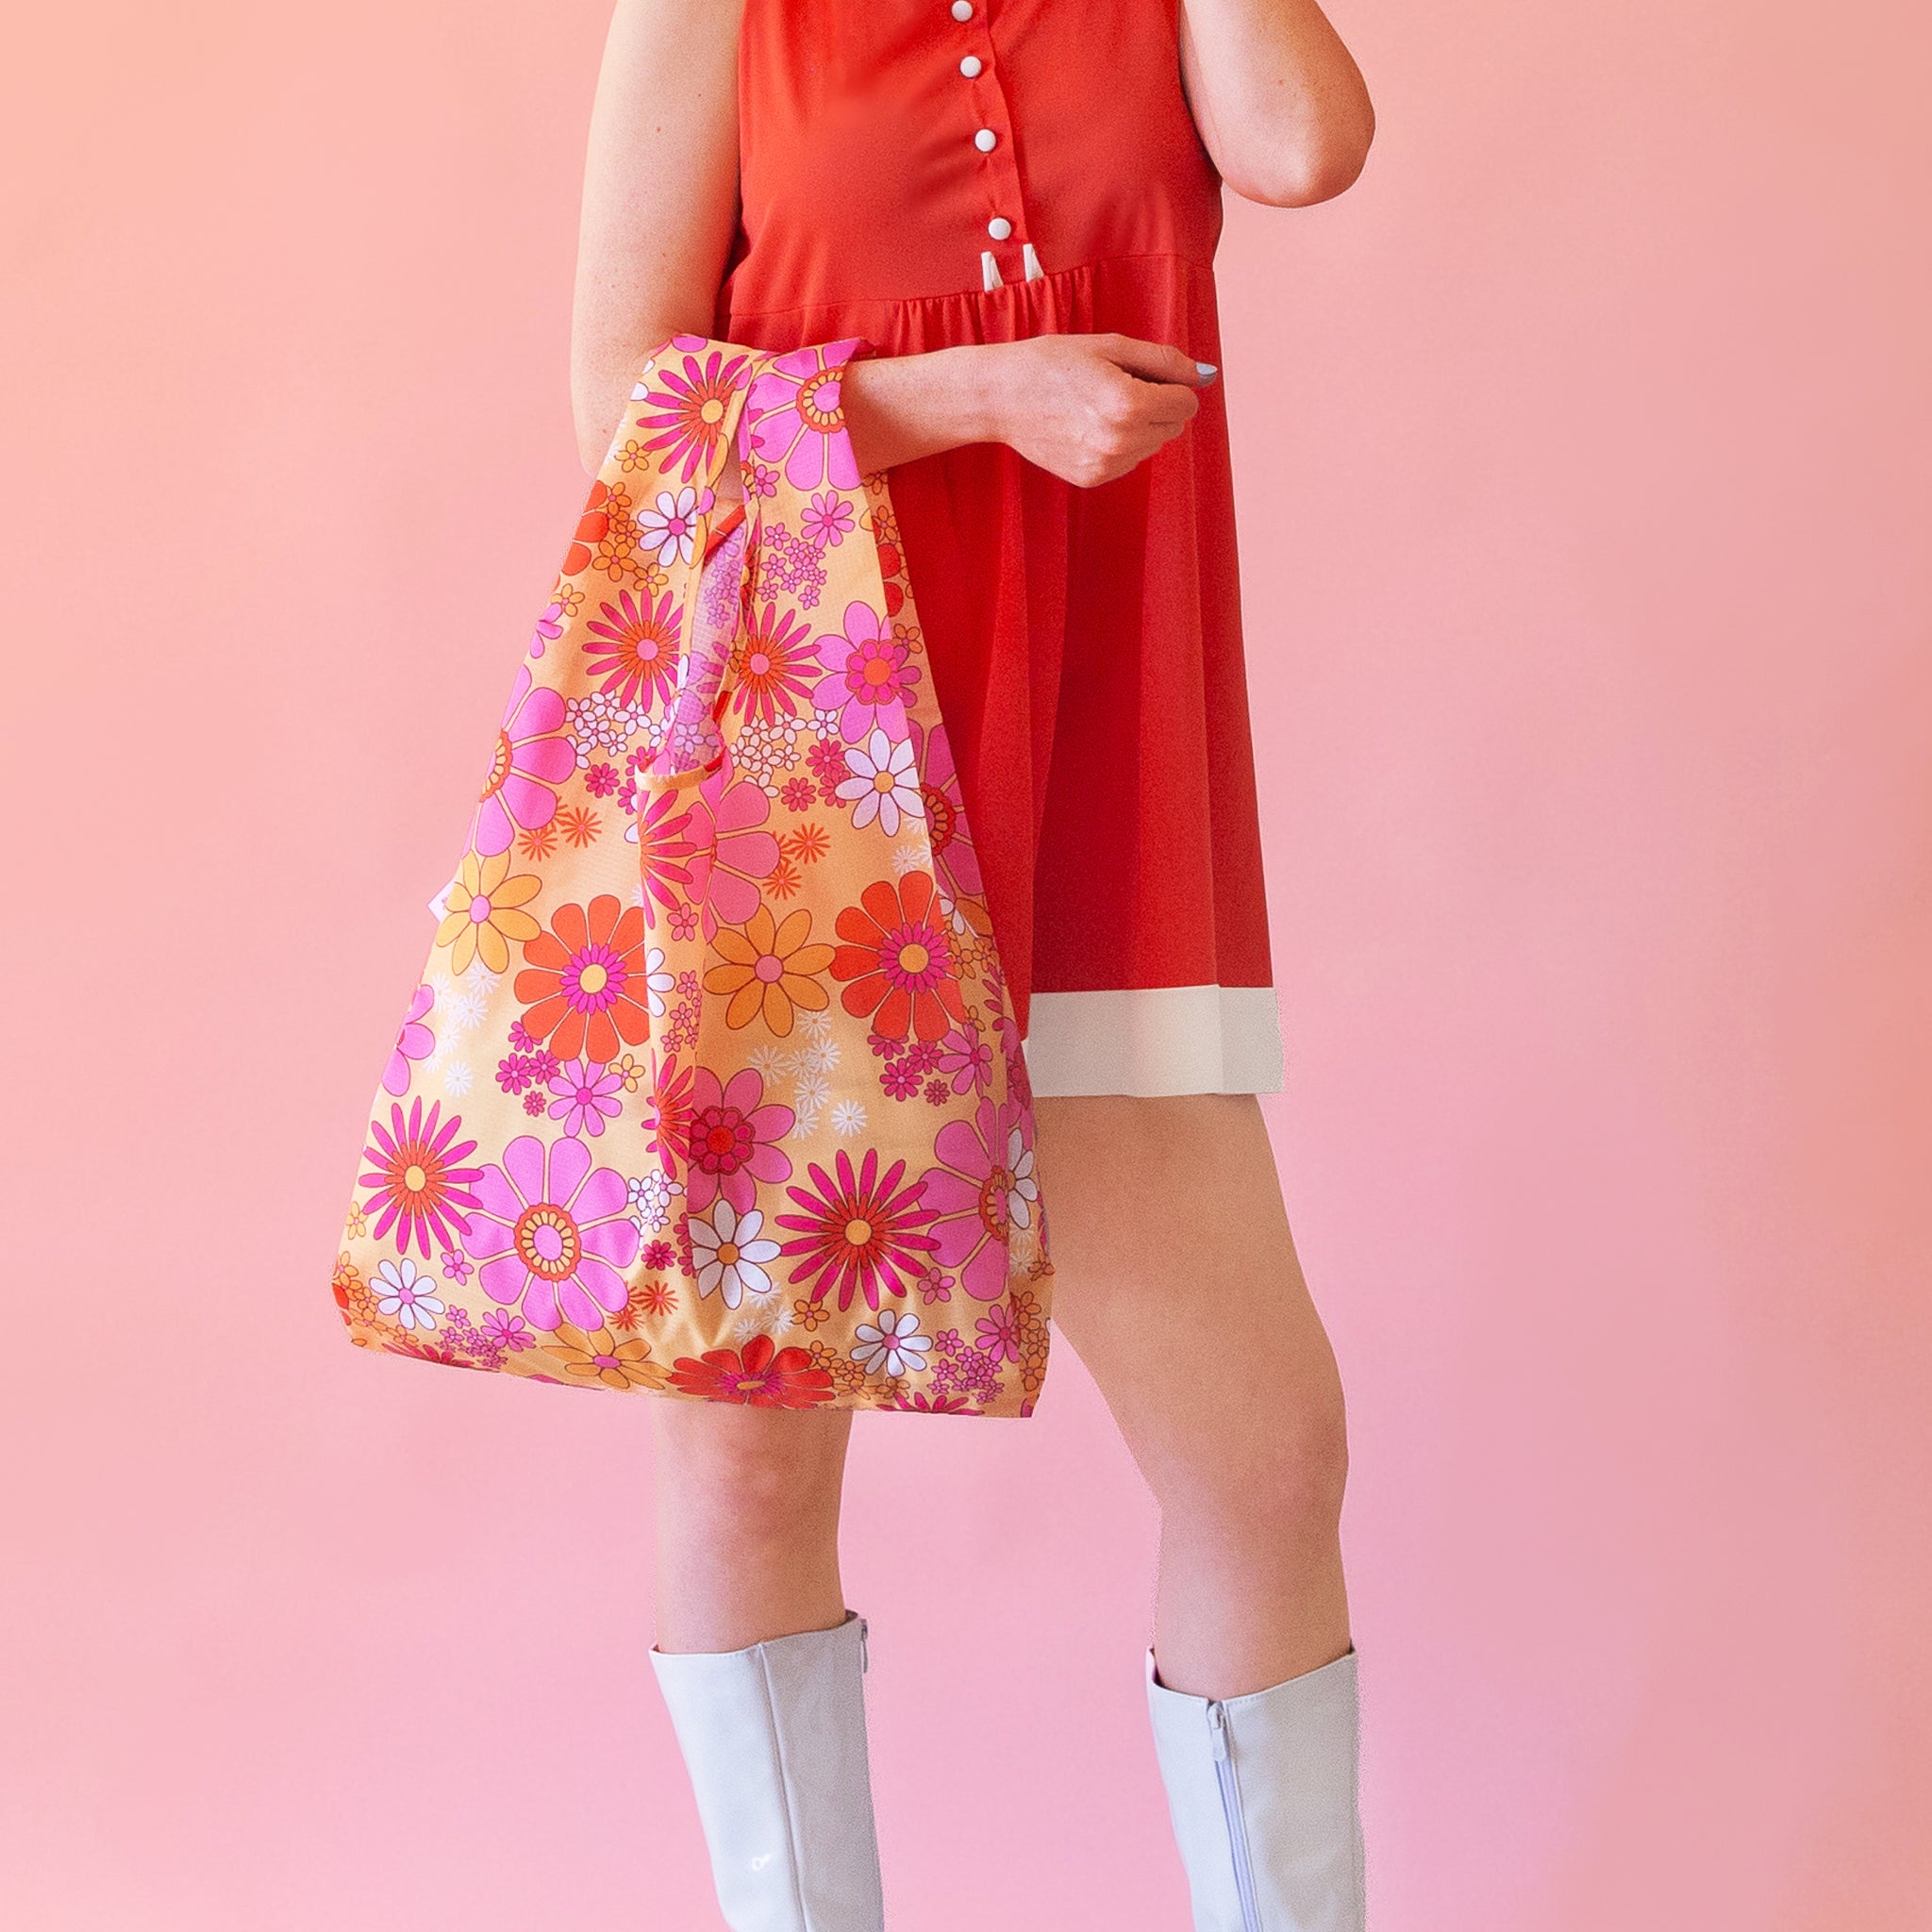 A pink floral print nylon reusable bag.